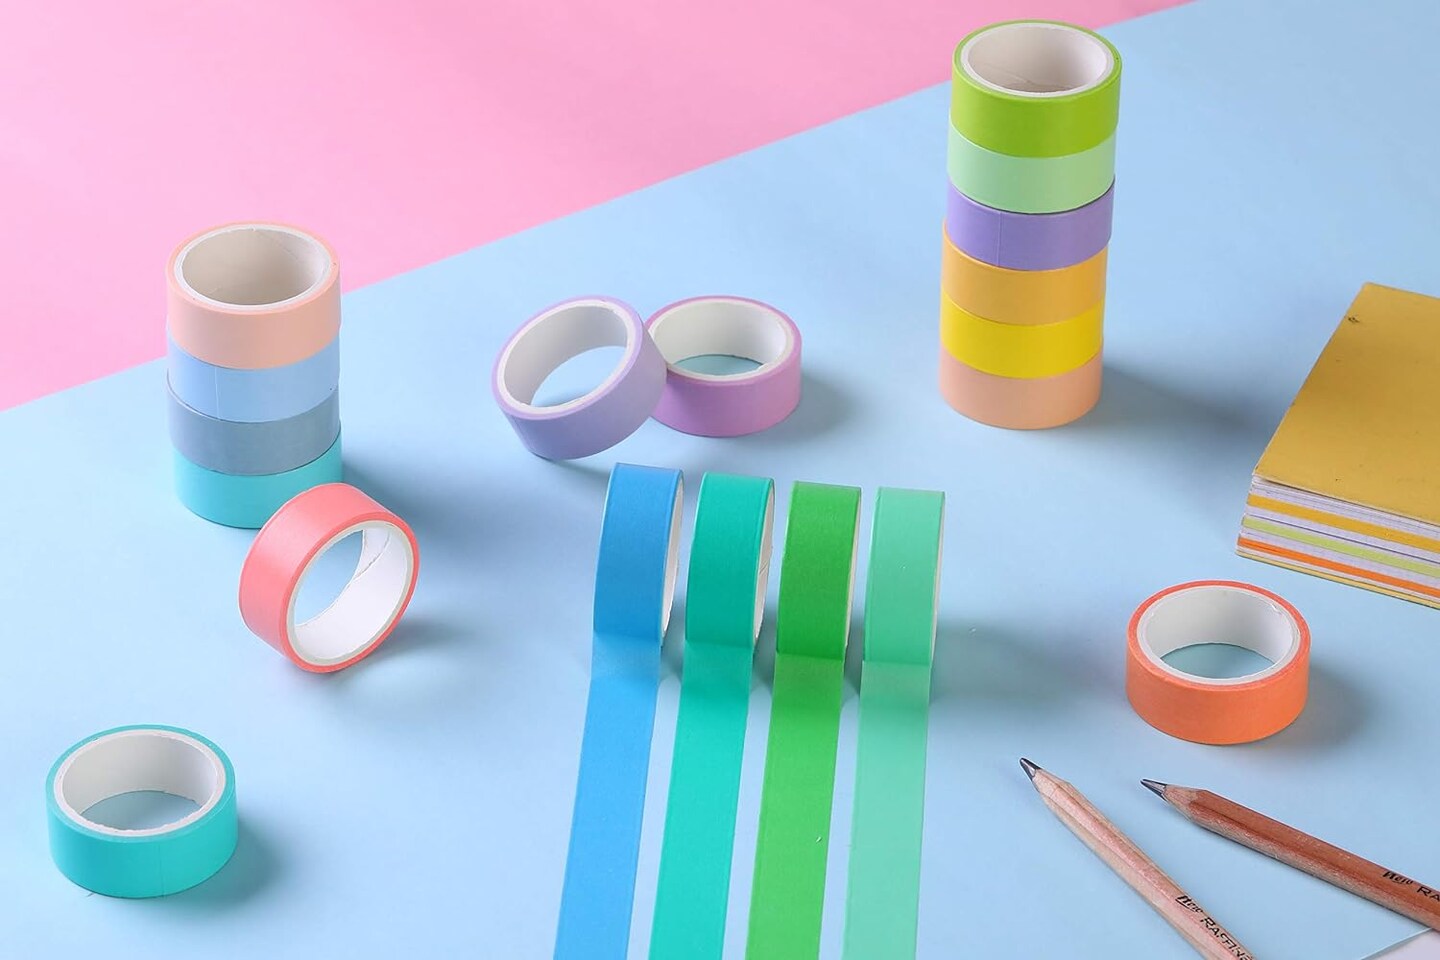 30 Rolls Washi Masking Tape Set, 15mm Wide Colorful Rainbow, Decorative Writable Craft Tape for DIY Scrapbook Designs